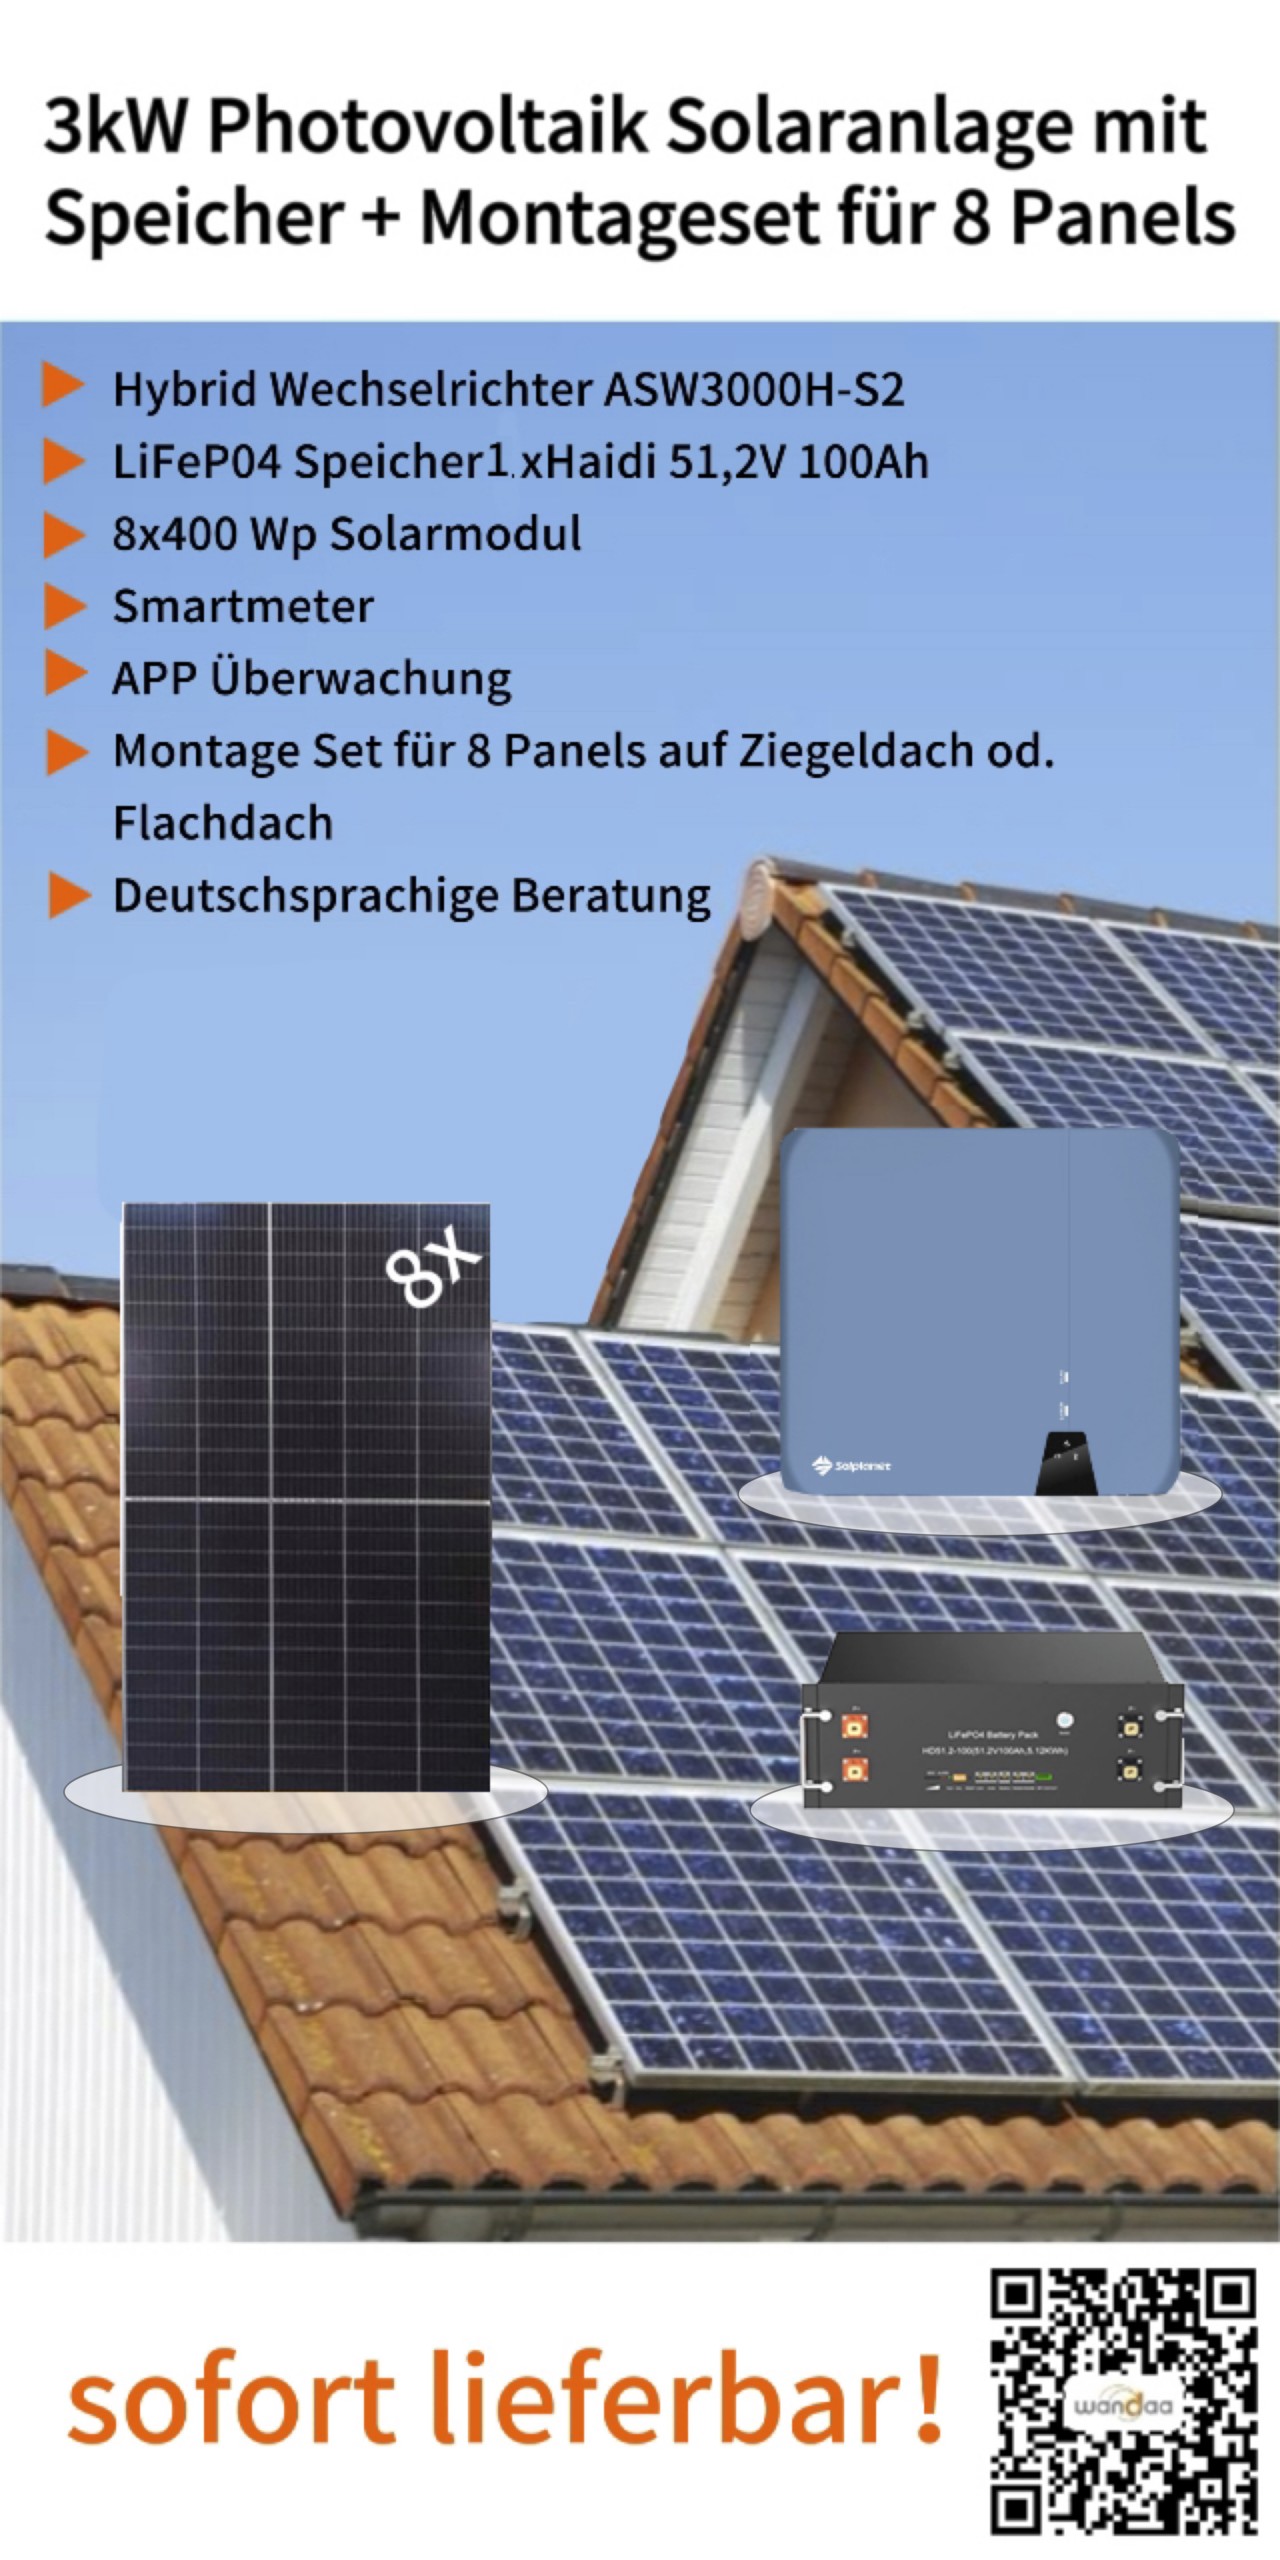 3kW Photovoltaik Solaranlage 8x400Wp 5kWh LiFePO4 Speicher und 3kW